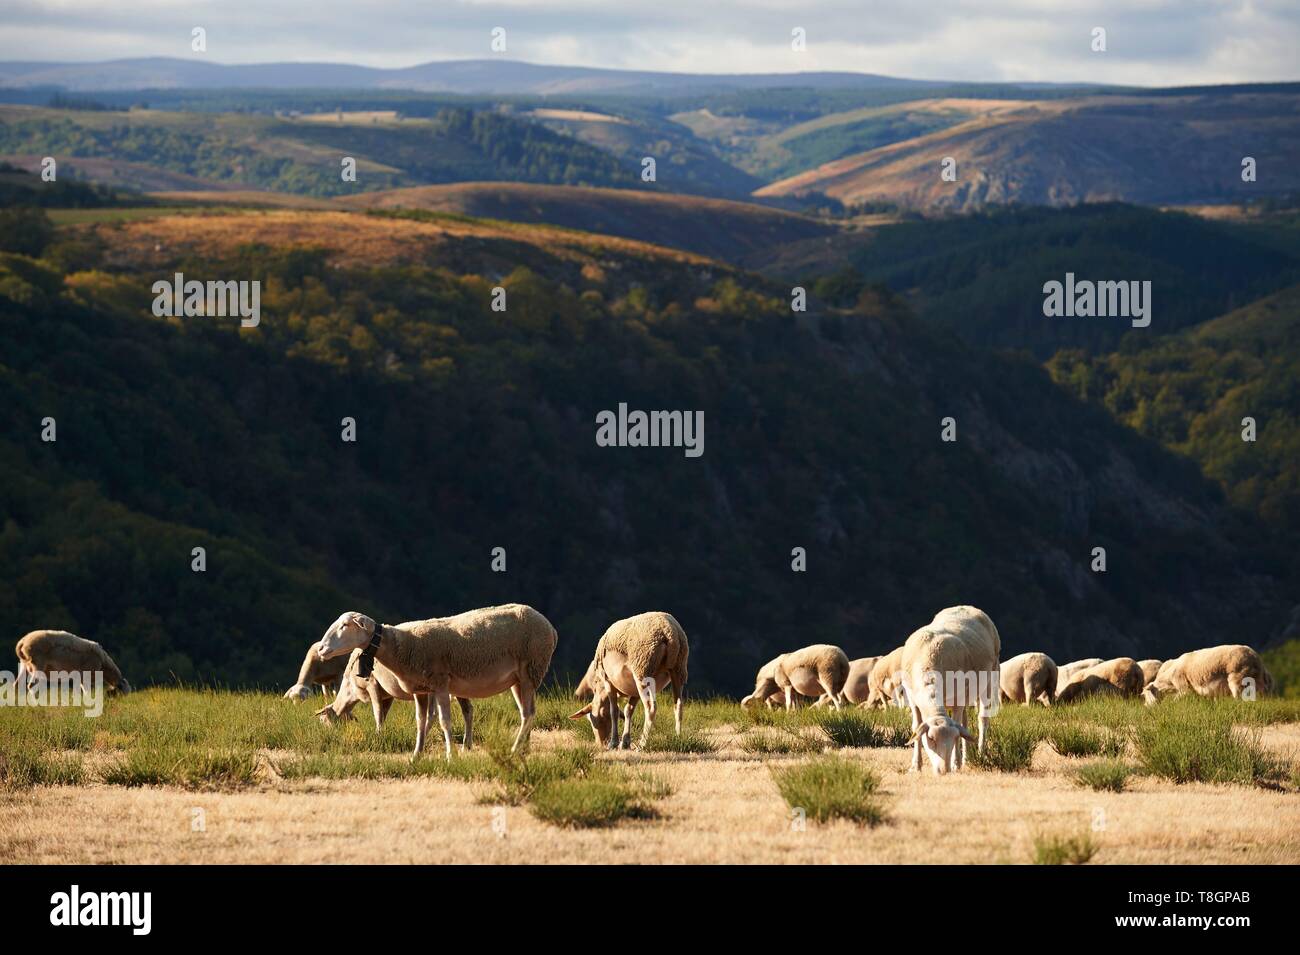 France, Lozere, Prevencheres, Hameau de la Beyssieres, Oliver Morin, Lozere Lamb Breeder Stock Photo